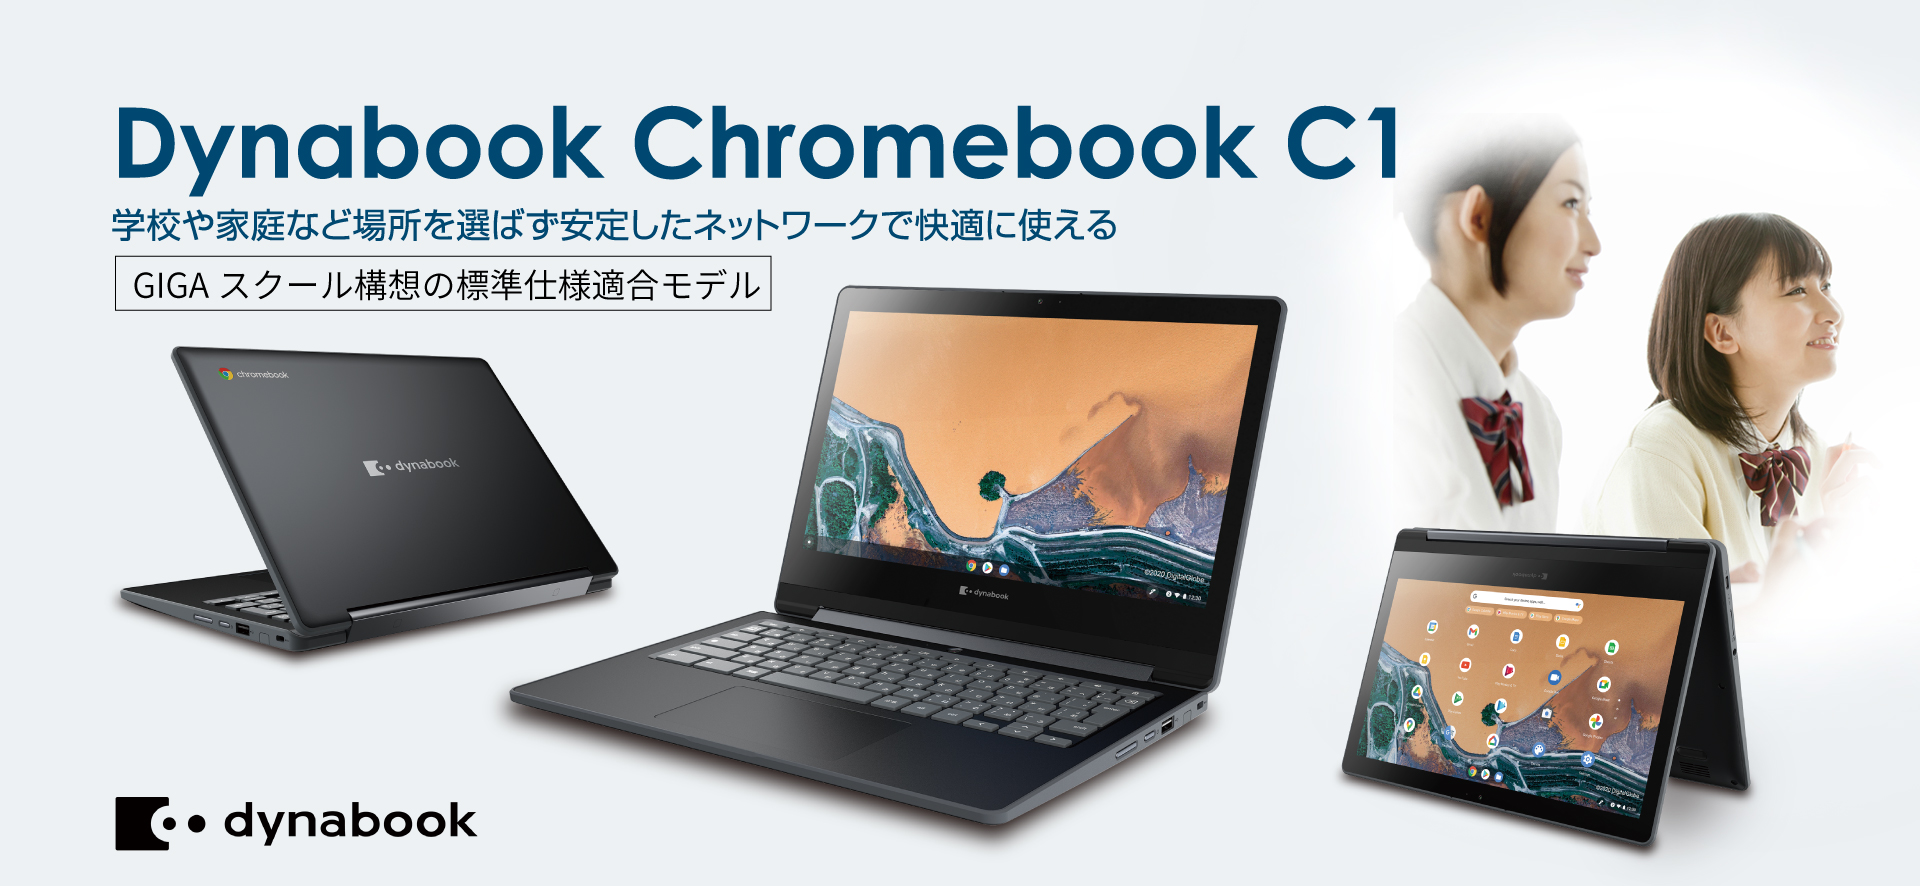 Dynabook Chromebook C1